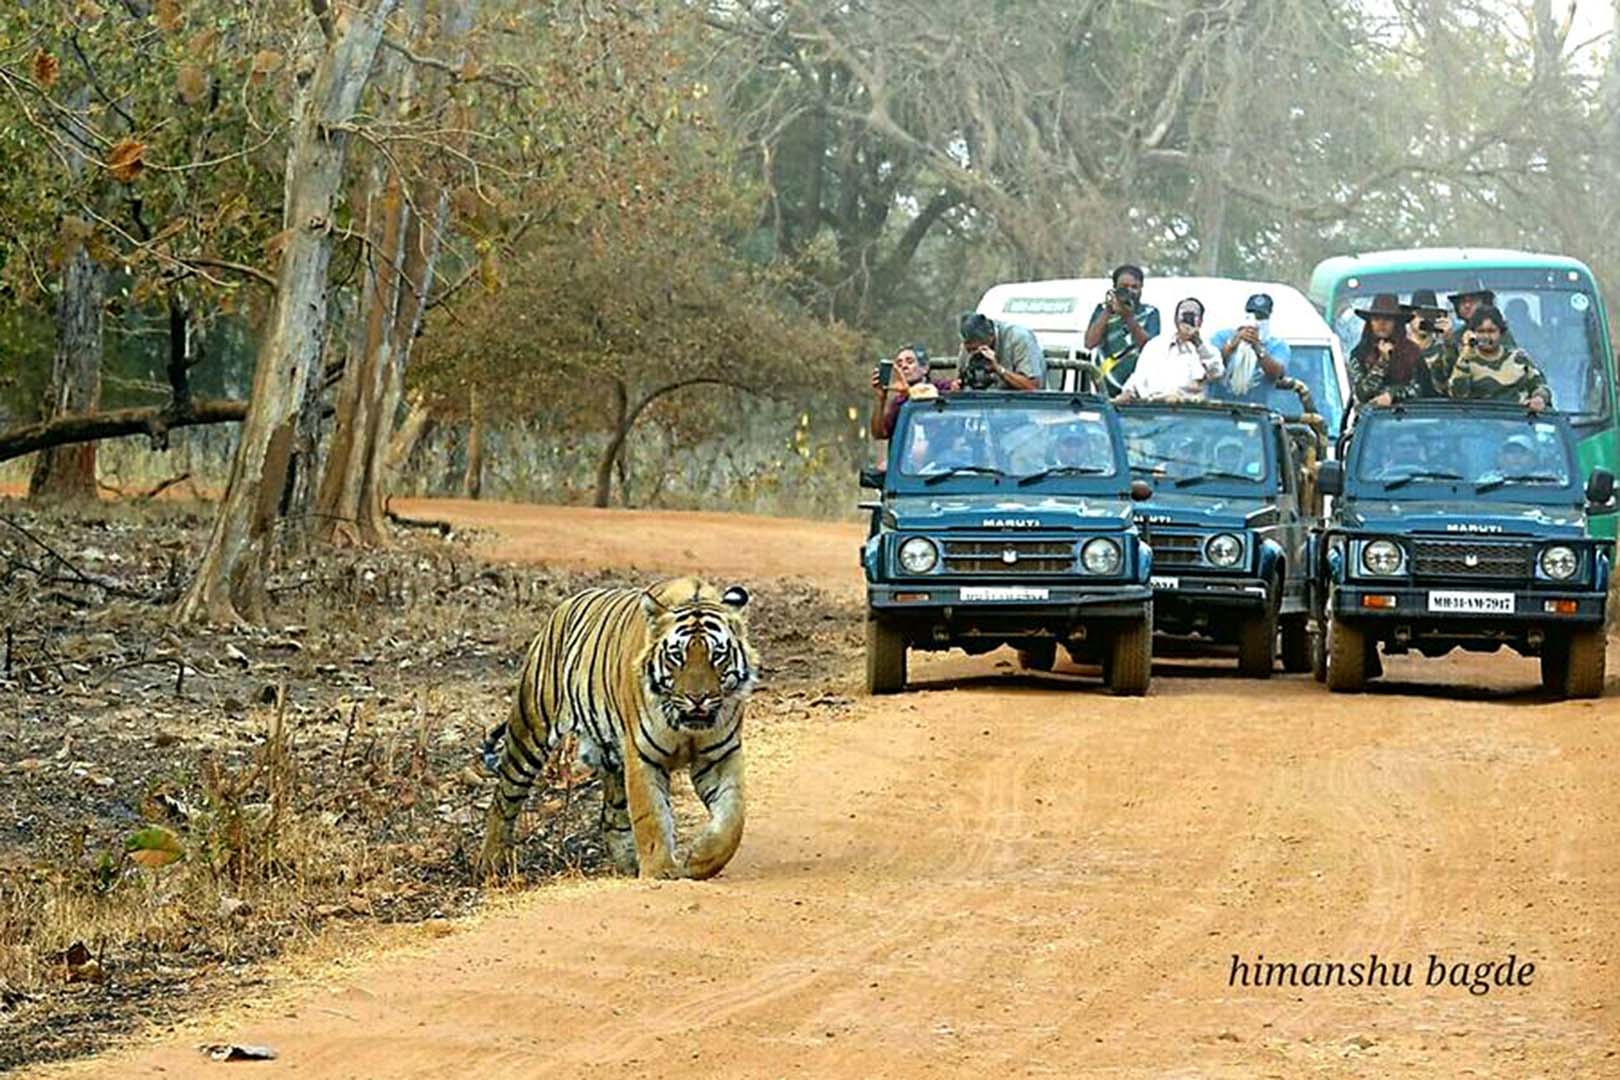 Himanshu Bagde best Tiger Safari in India in Indian National Park - tiger walking on dirt road in Jungle